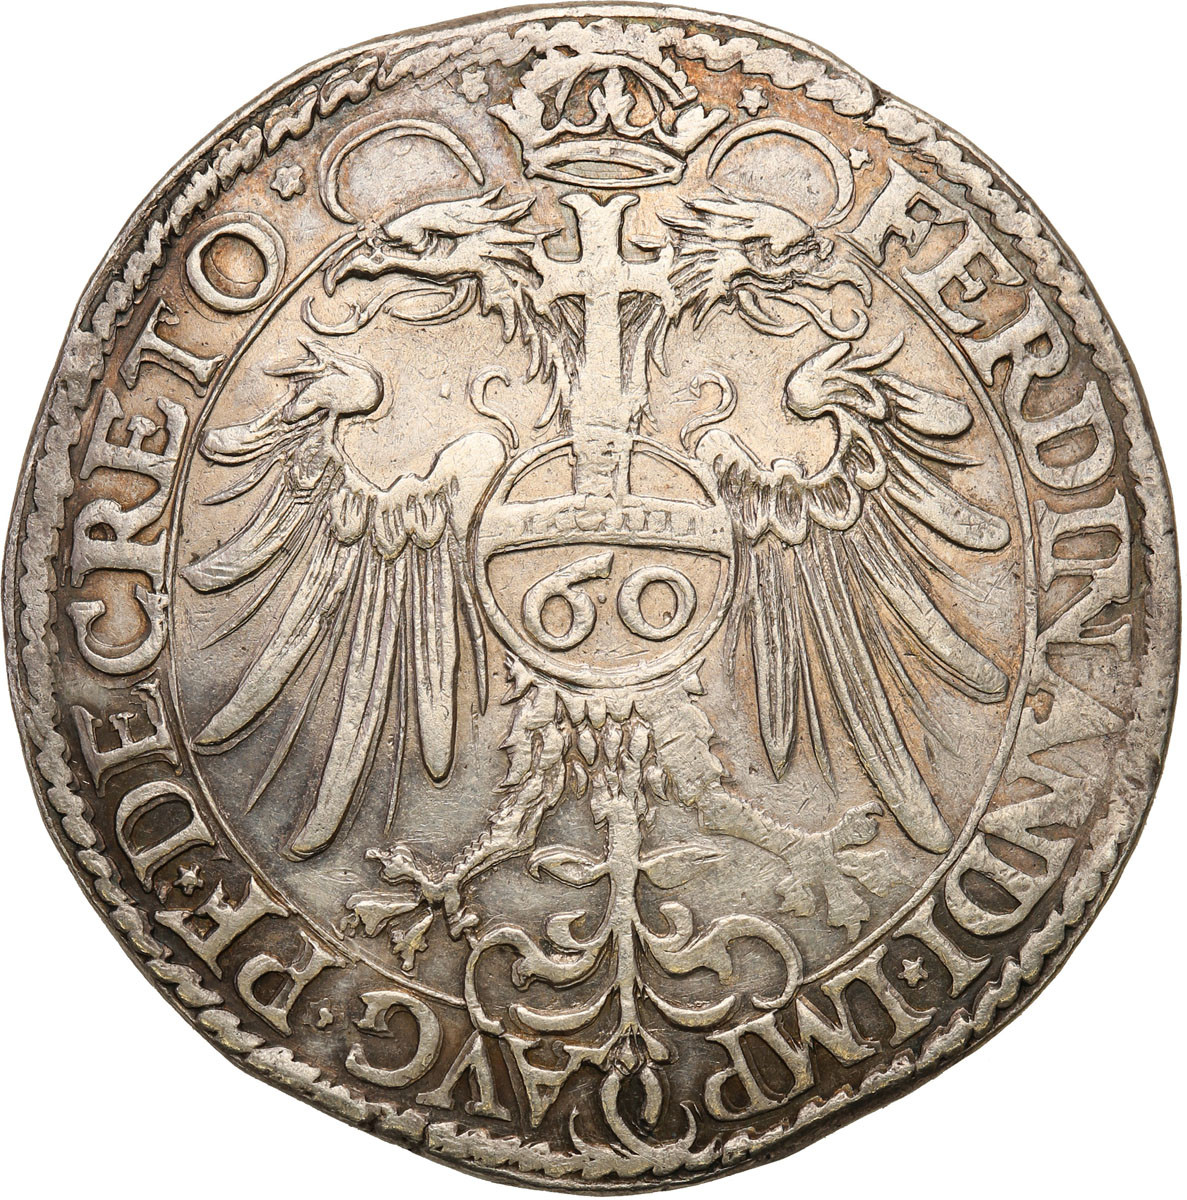 Niemcy. Nürnberg. Guldentaler (60 krajcarów) 1564